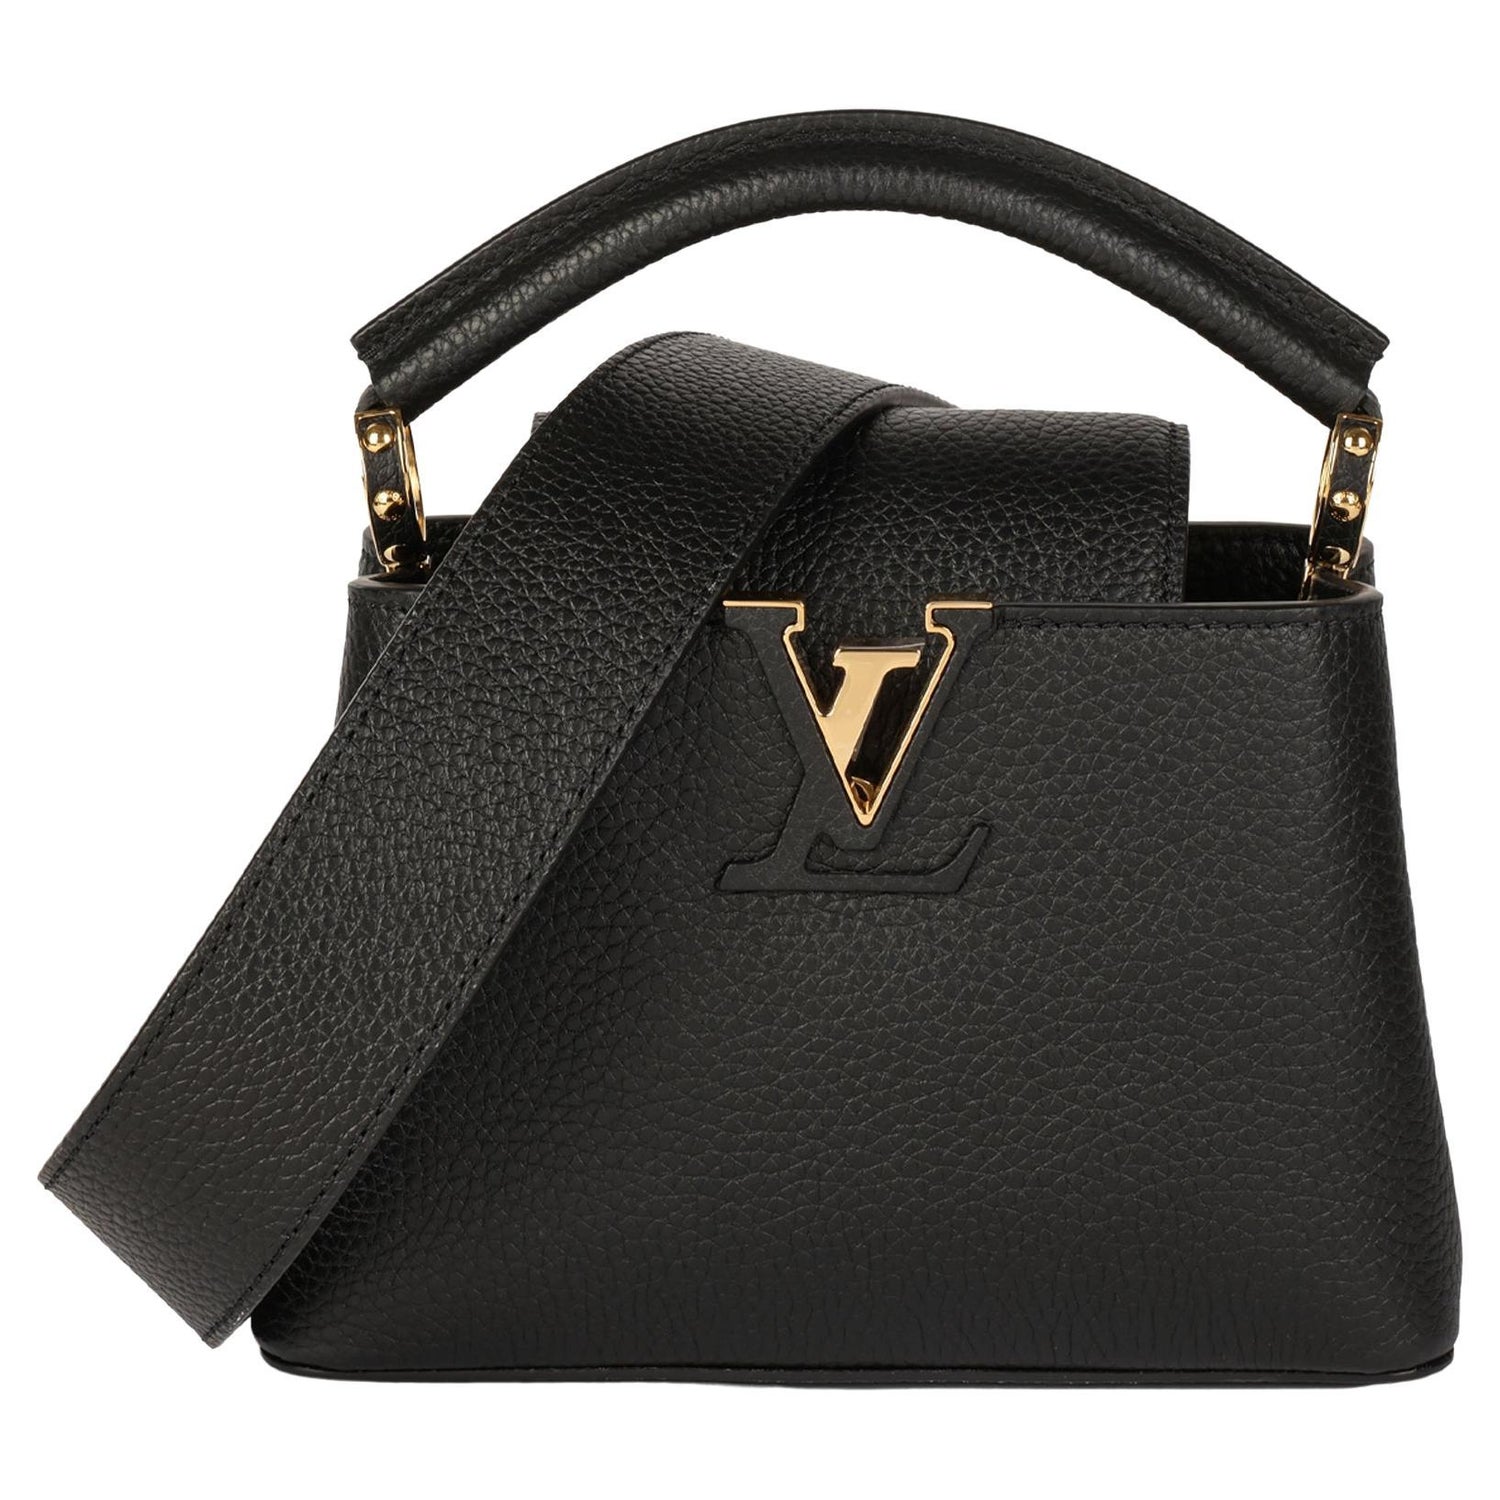 Black Louis Vuitton Purses - 1,144 For Sale on 1stDibs  black louis vuitton  bag, louis vuitton purses on sale, lv purses